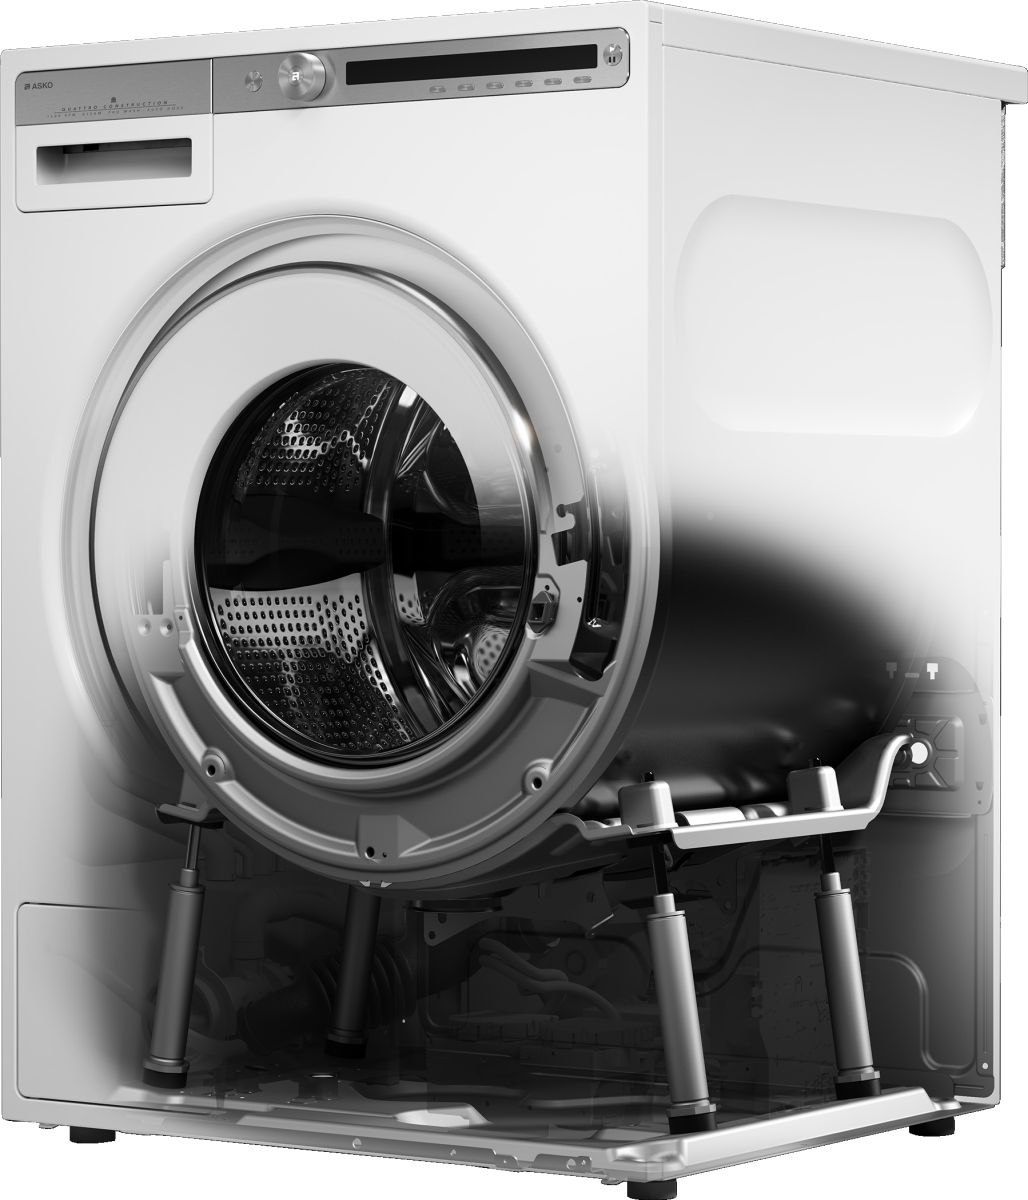 Symmetrie Verlenen Kinderen ASKO wasmachine Logic 8 kg A+++ - i.Lectro - Elektro met service aan  webshop prijzen